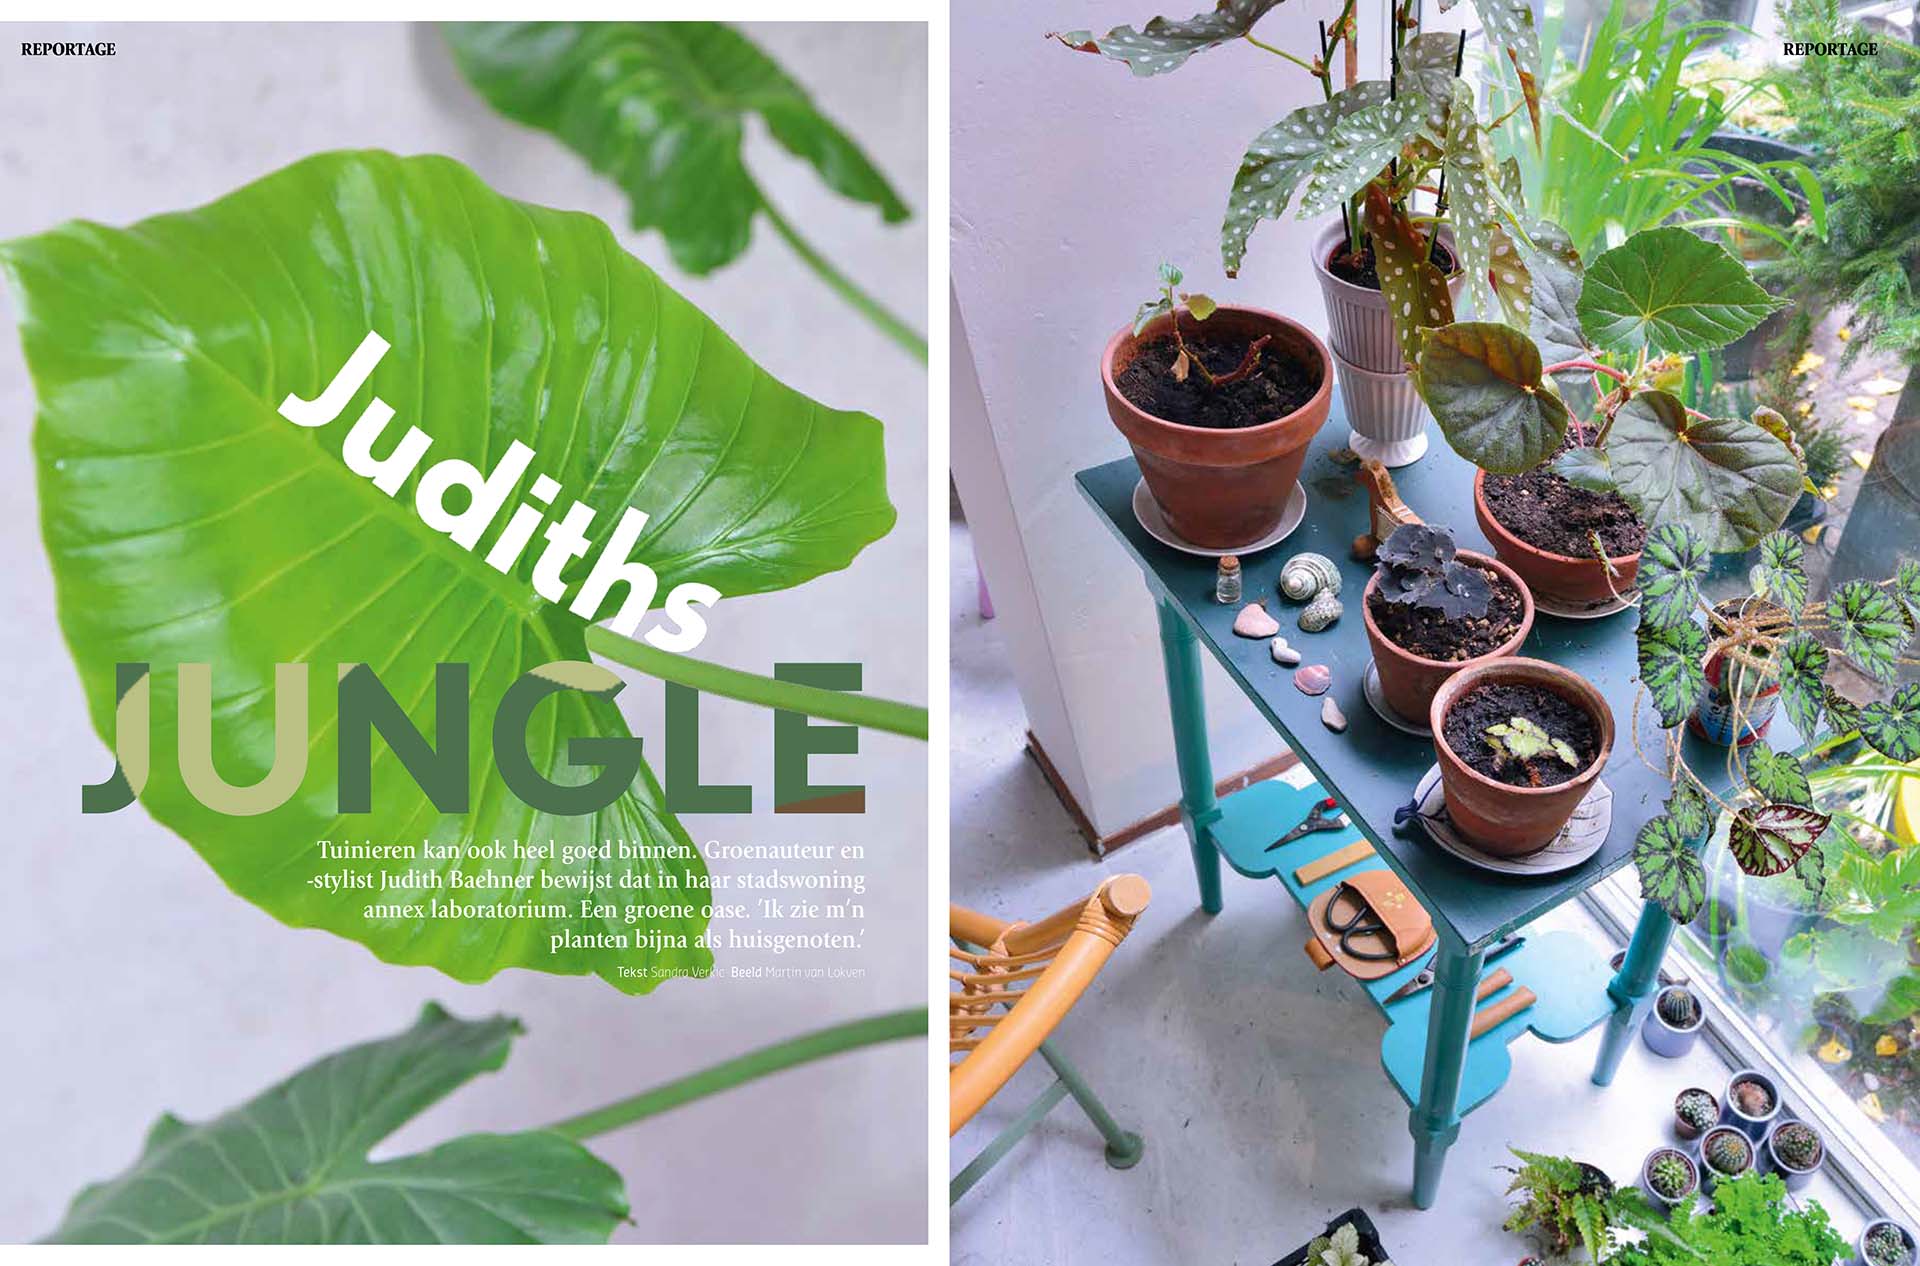 Publicatie van Judiths Jungle in Groei & Bloei magazine.